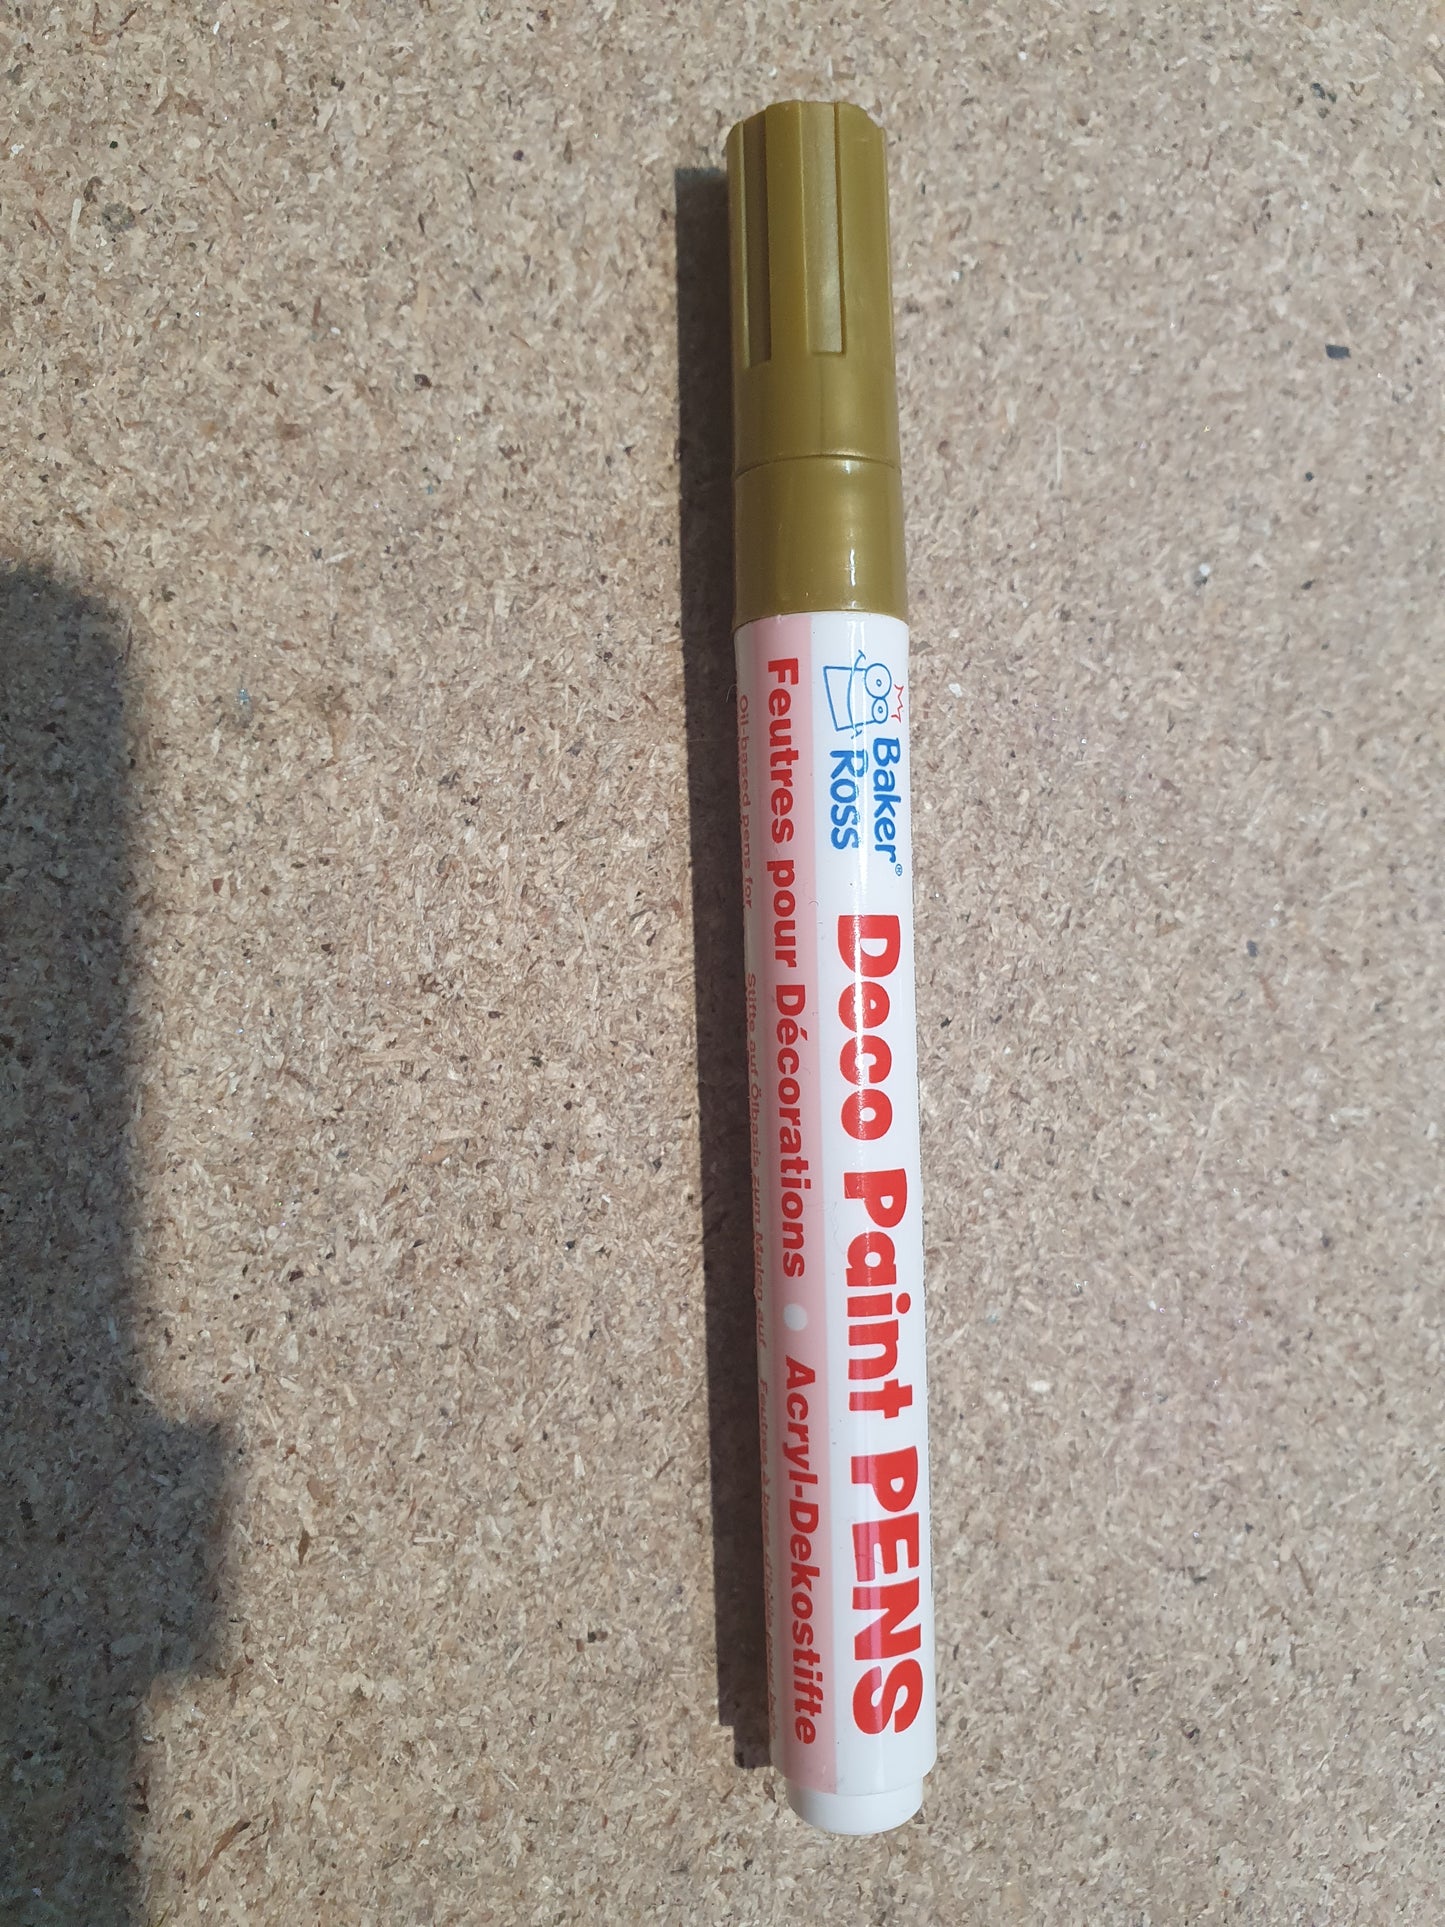 Edging / highlighting paint pens